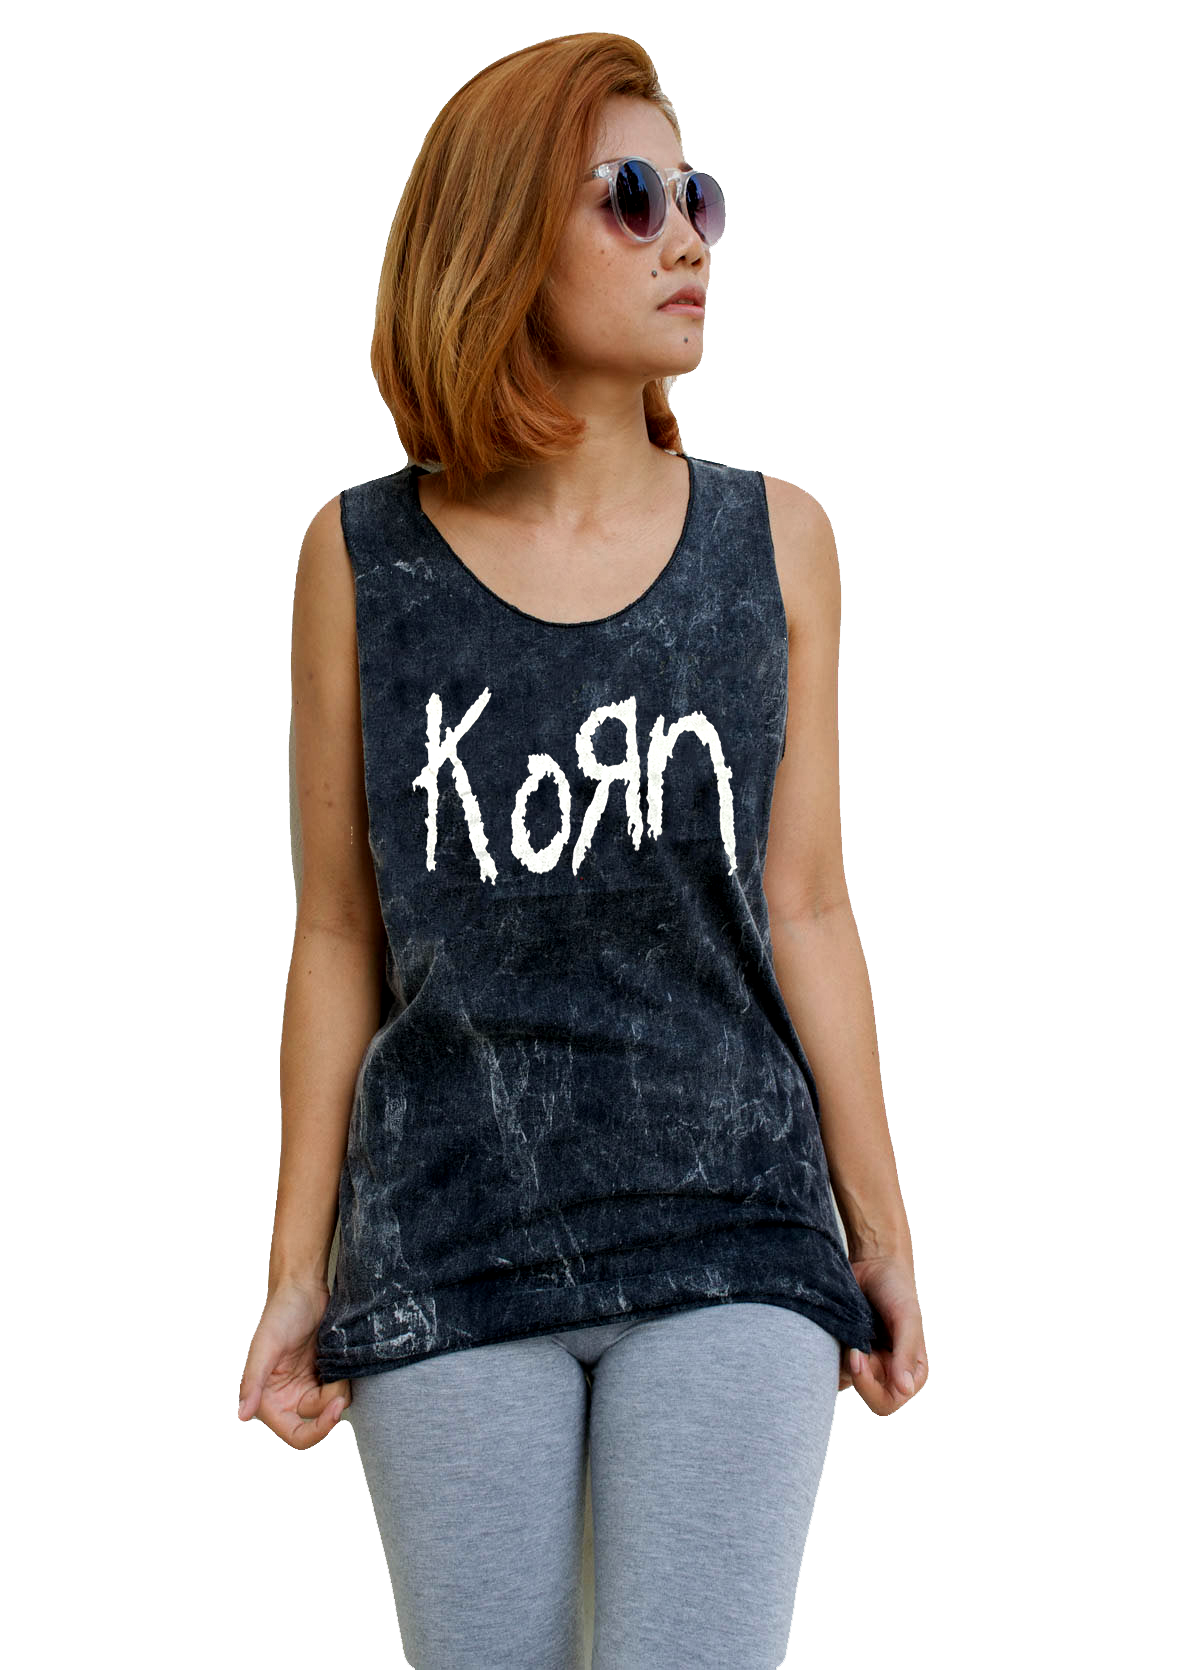 Unisex Korn Tank-Top Singlet vest Sleeveless T-shirt